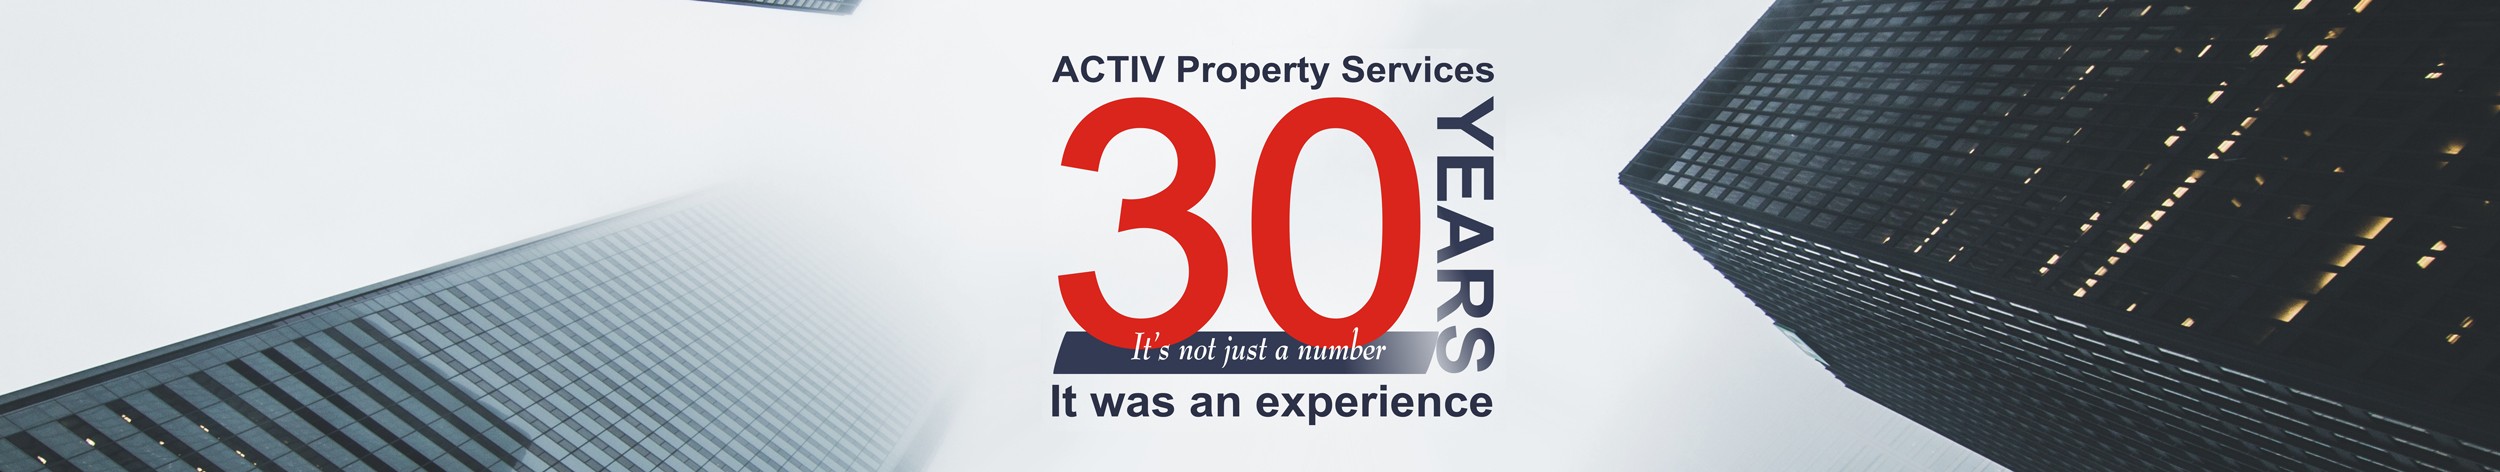 Activ Property Services